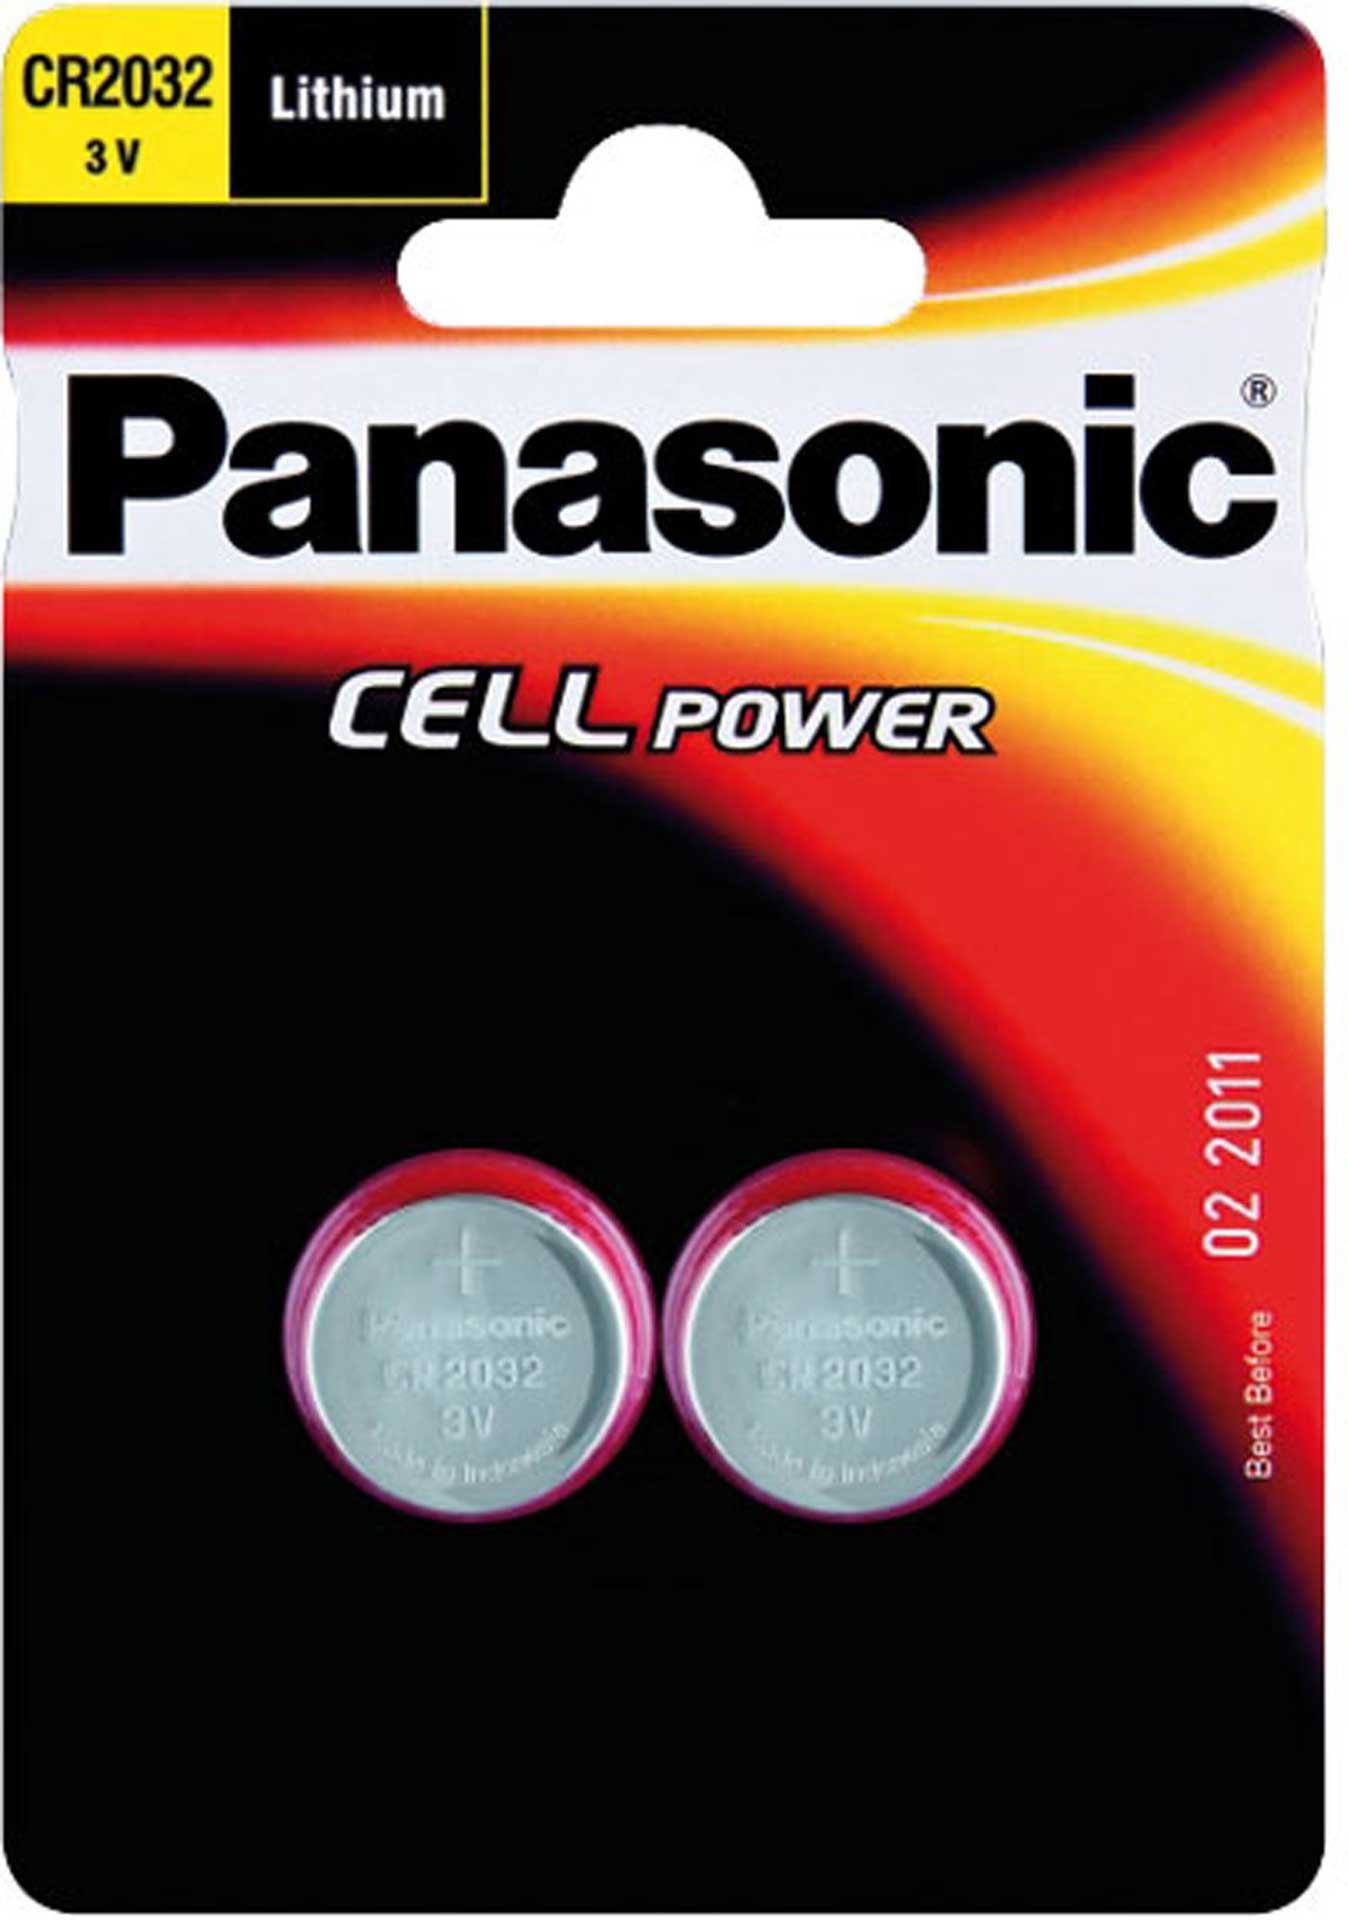 PANASONIC LITHIUM BUTTON CELL BATTERY CR2032 EP 3 V 2PCS